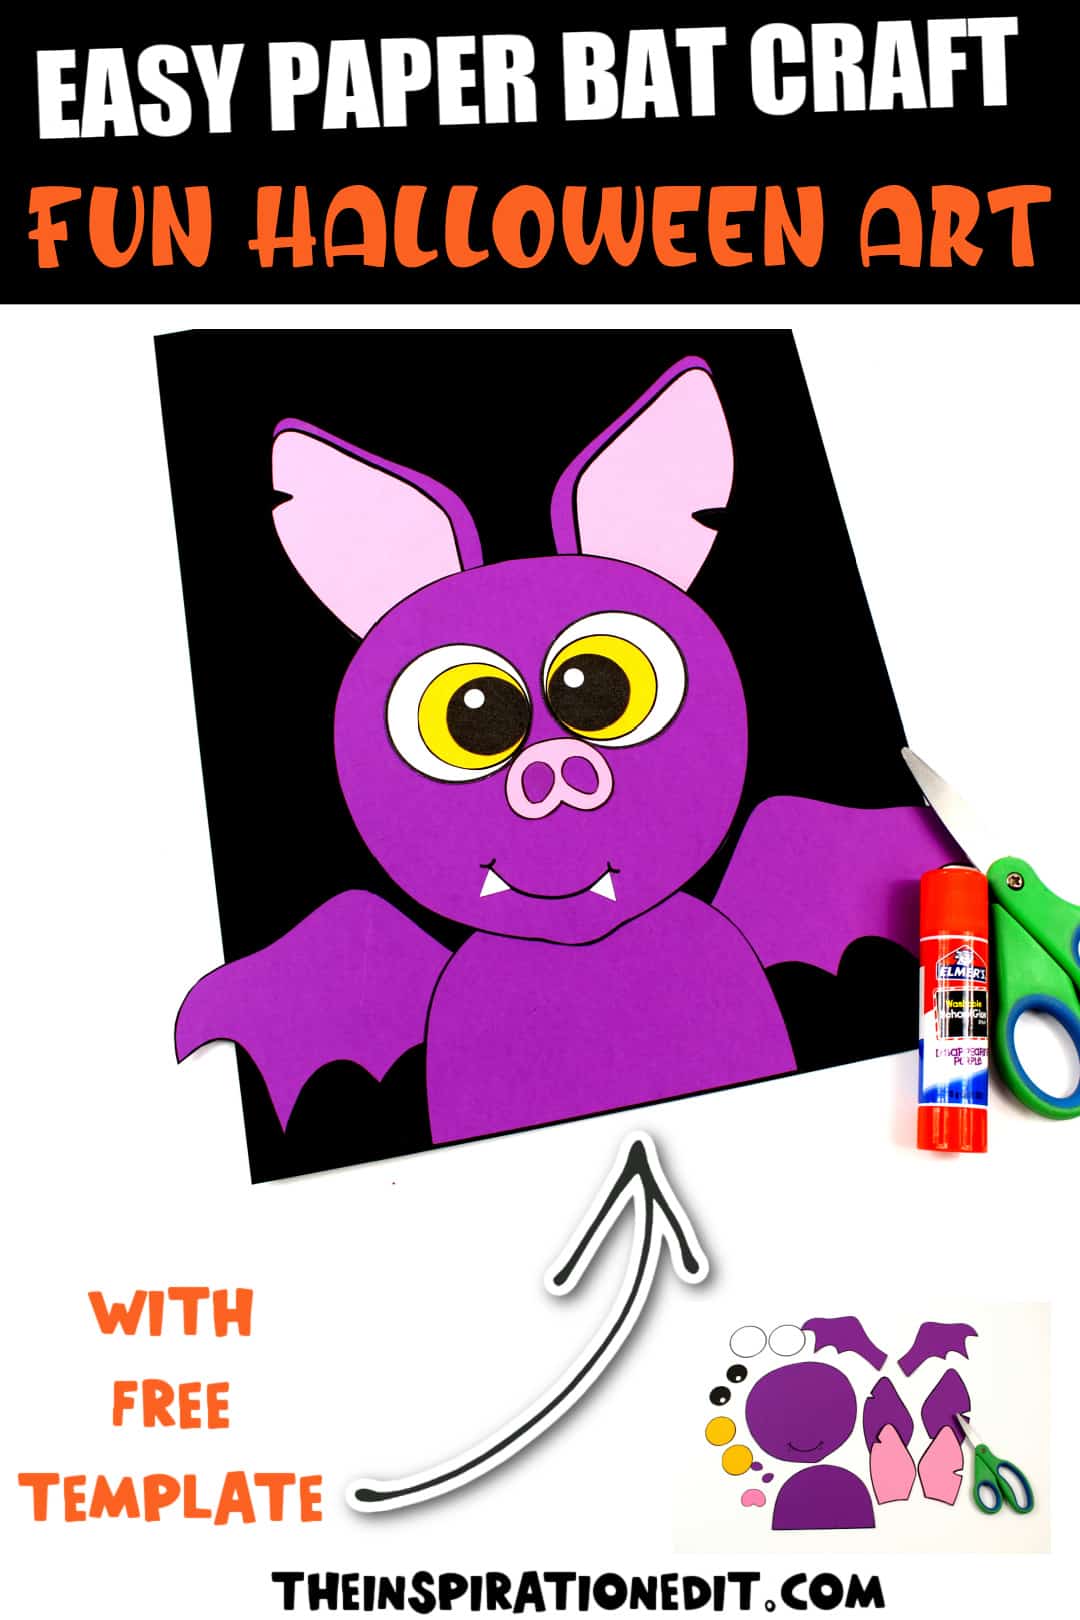 fun-halloween-bat-craft-for-kids-the-inspiration-edit